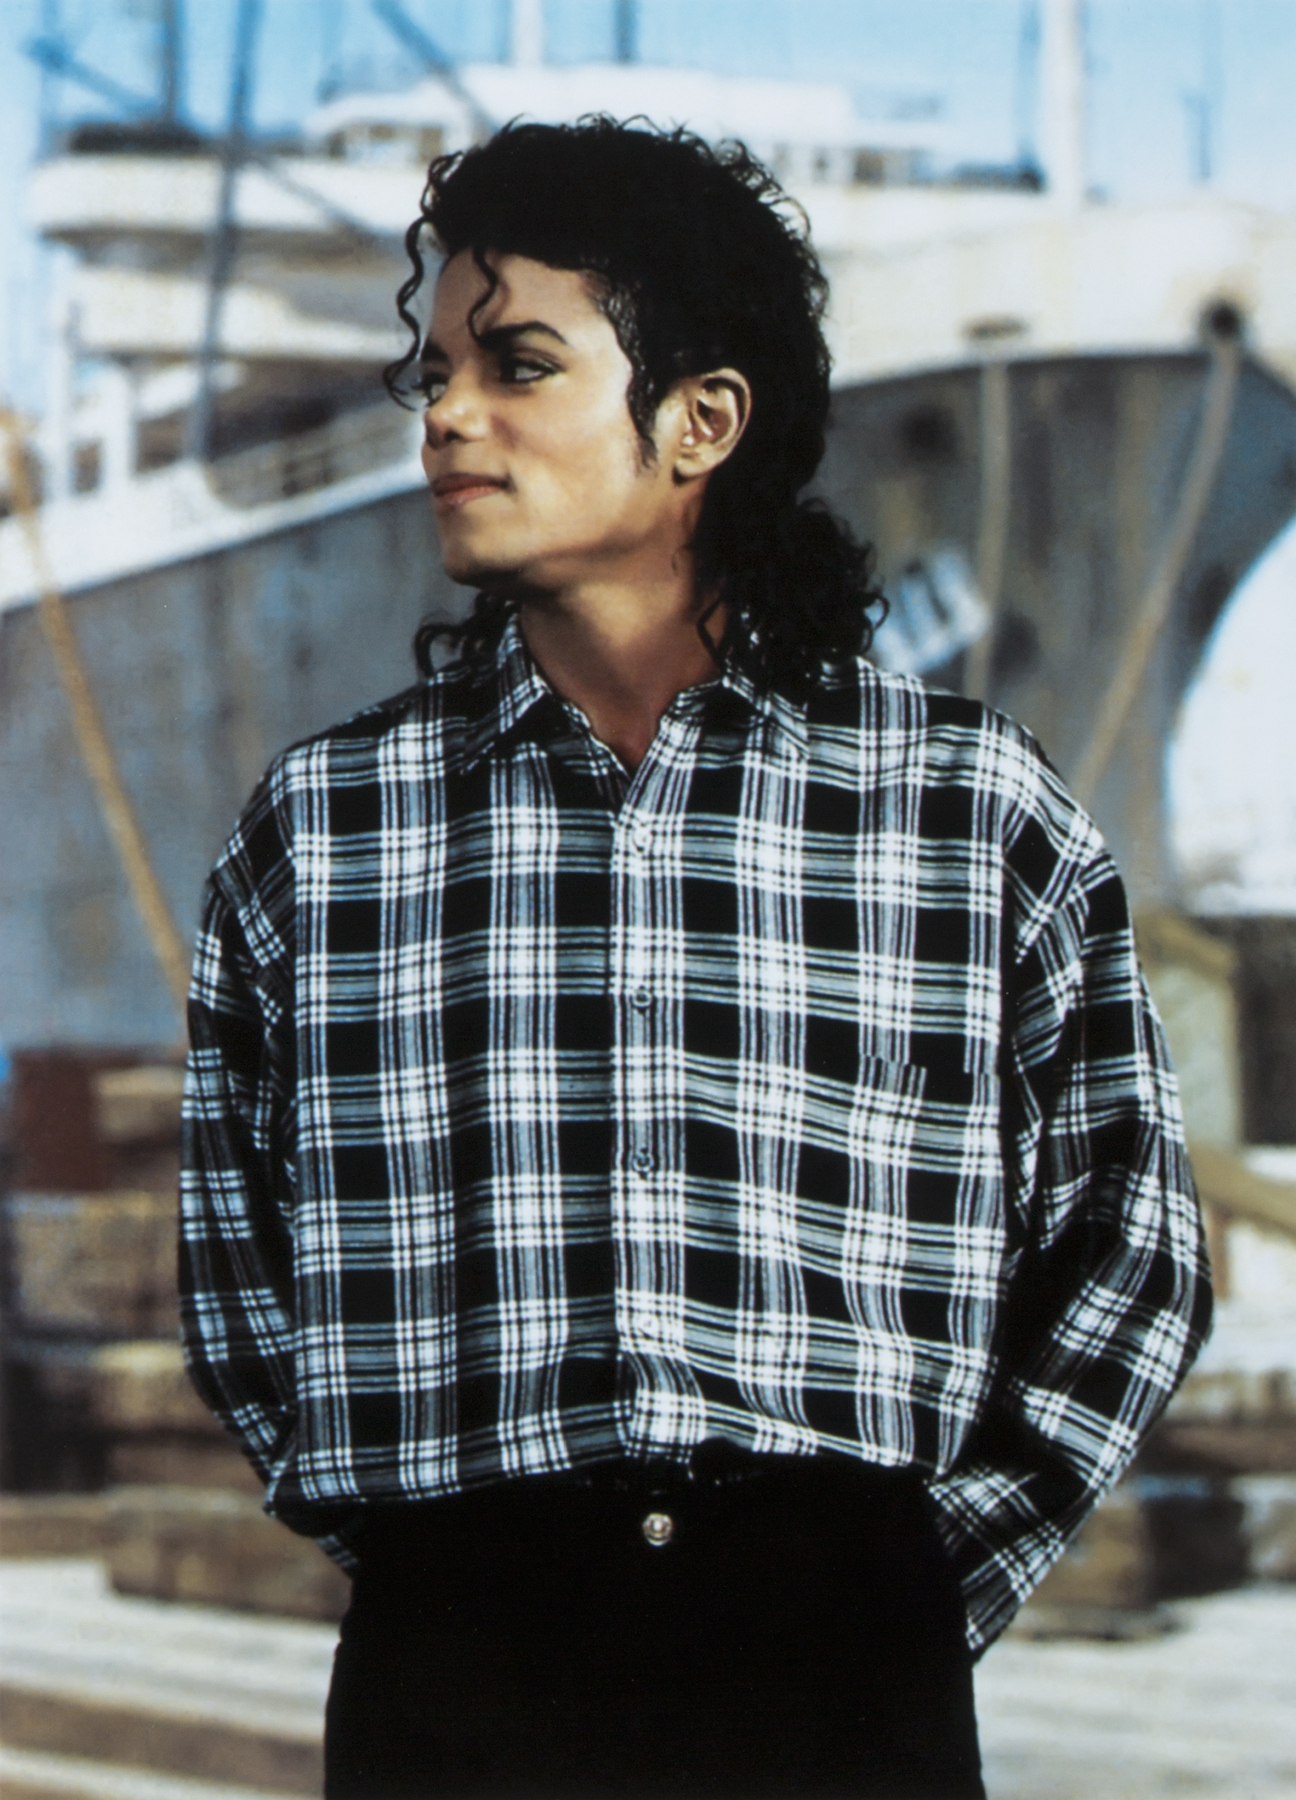 MICHAEL JACKSON WORN PLAID SHIRT A black and white windowpane plaid shirt worn by Michael Jackson on - Image 2 of 2